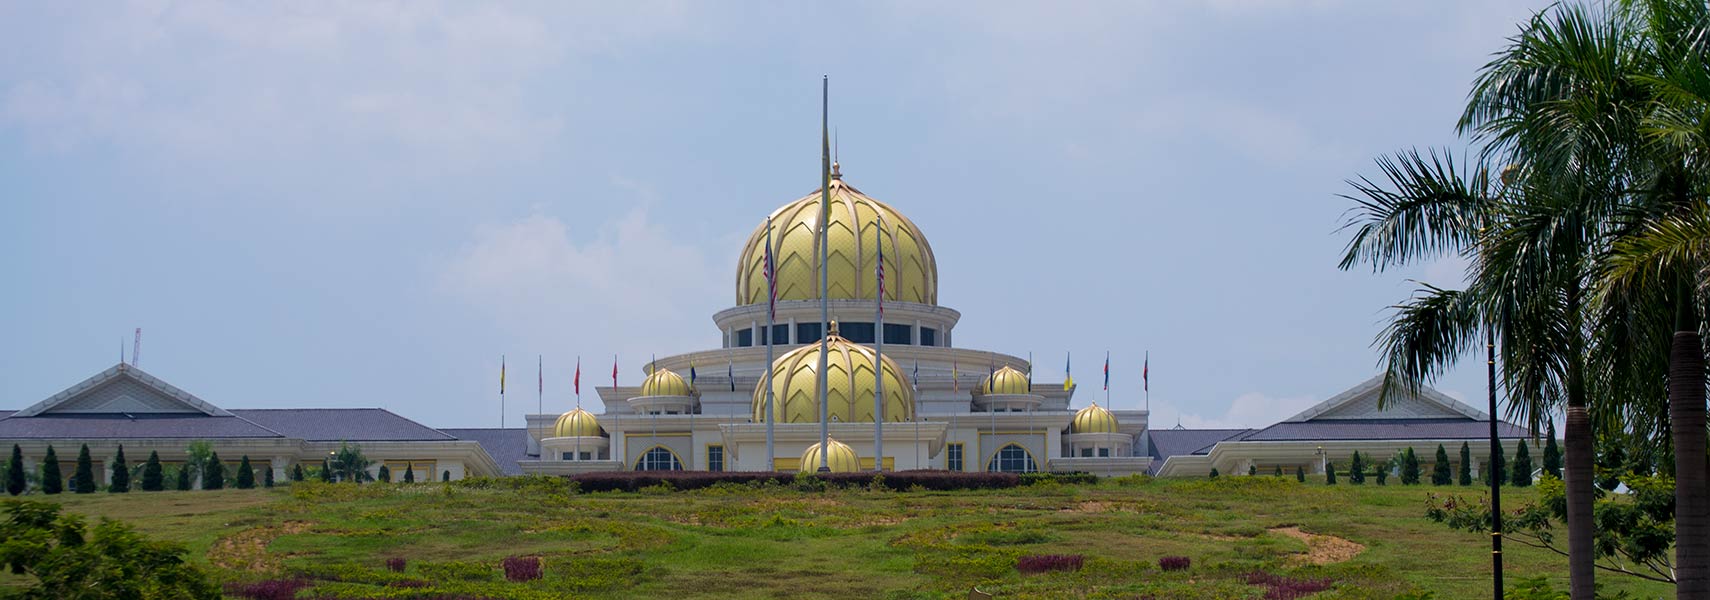 Istana Negara, the National Palace in Kuala Lumpur